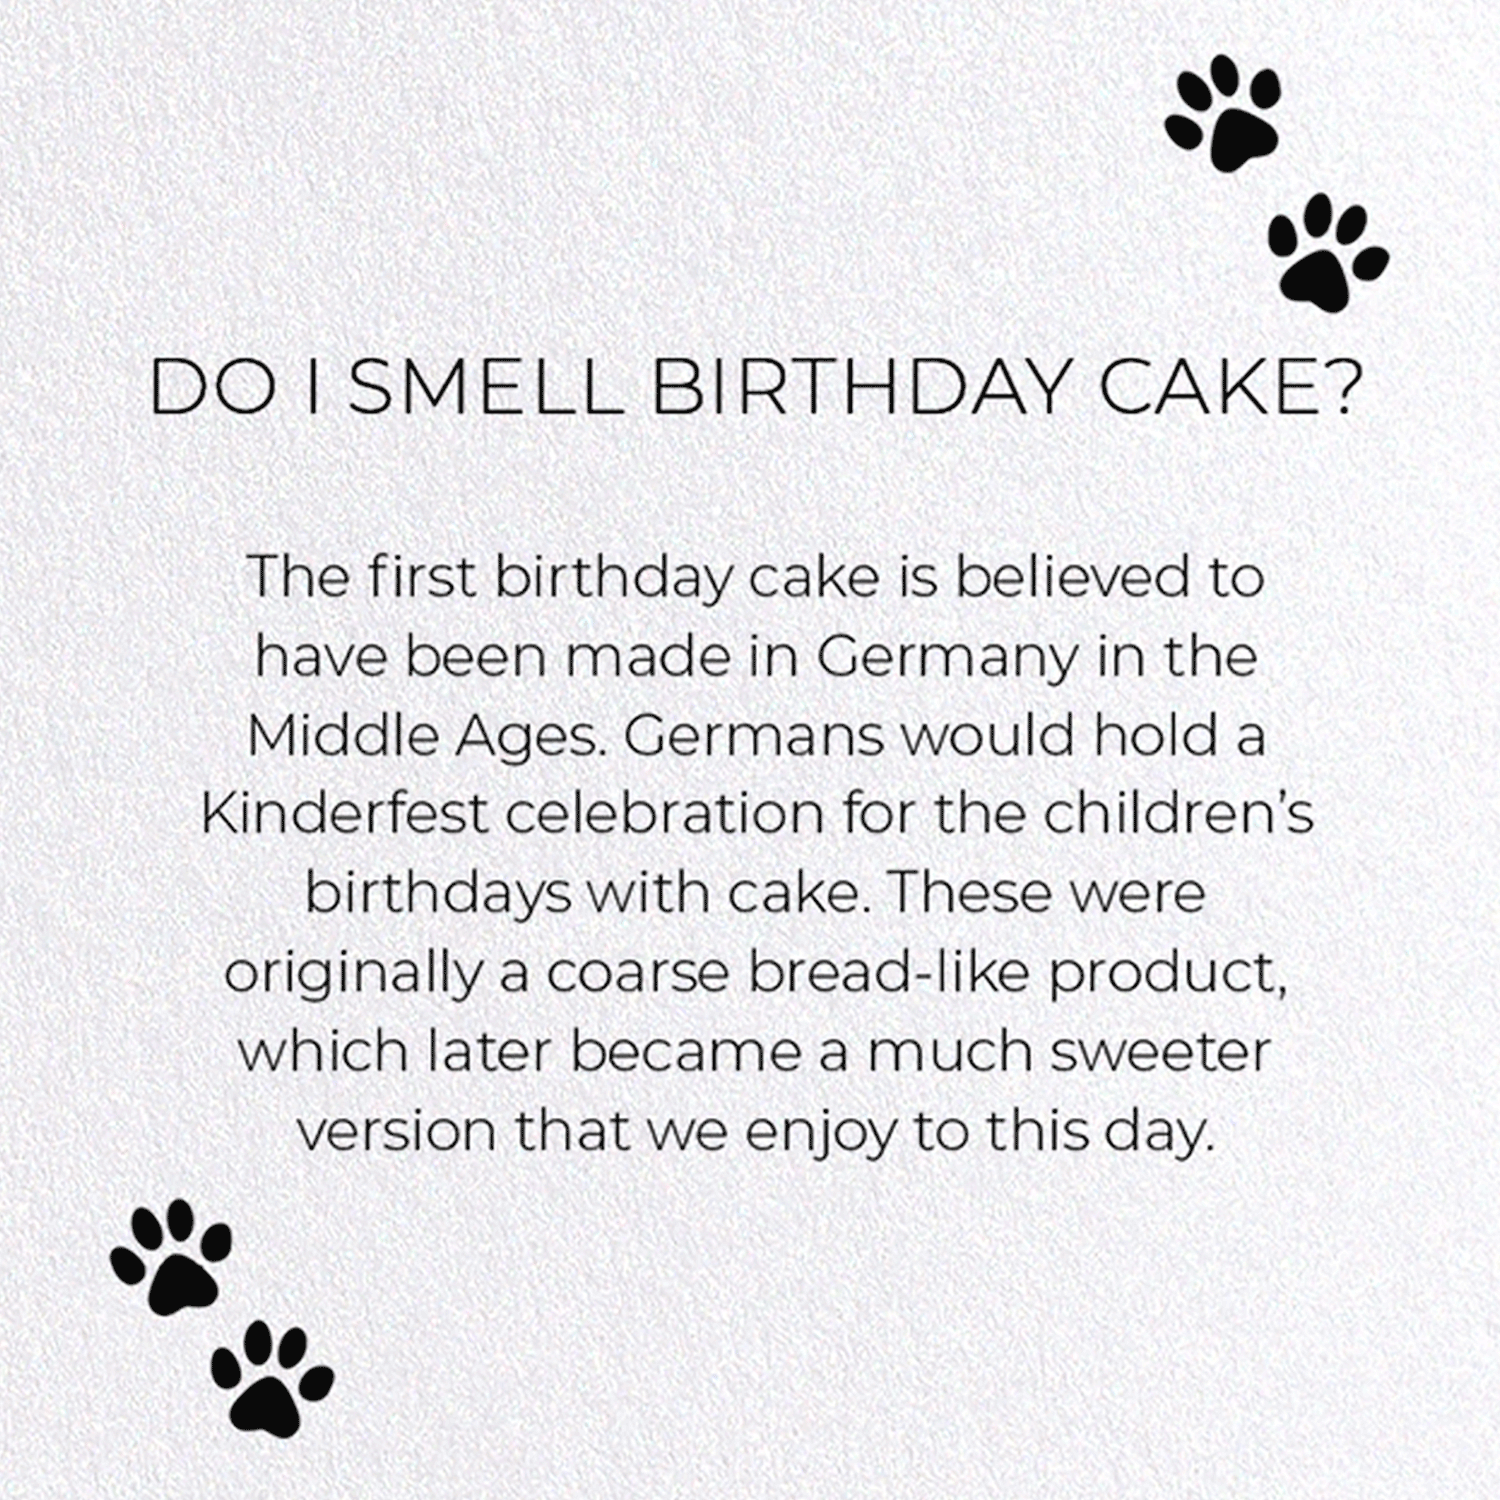 DO I SMELL BIRTHDAY CAKE?: Funny Animal Greeting Card